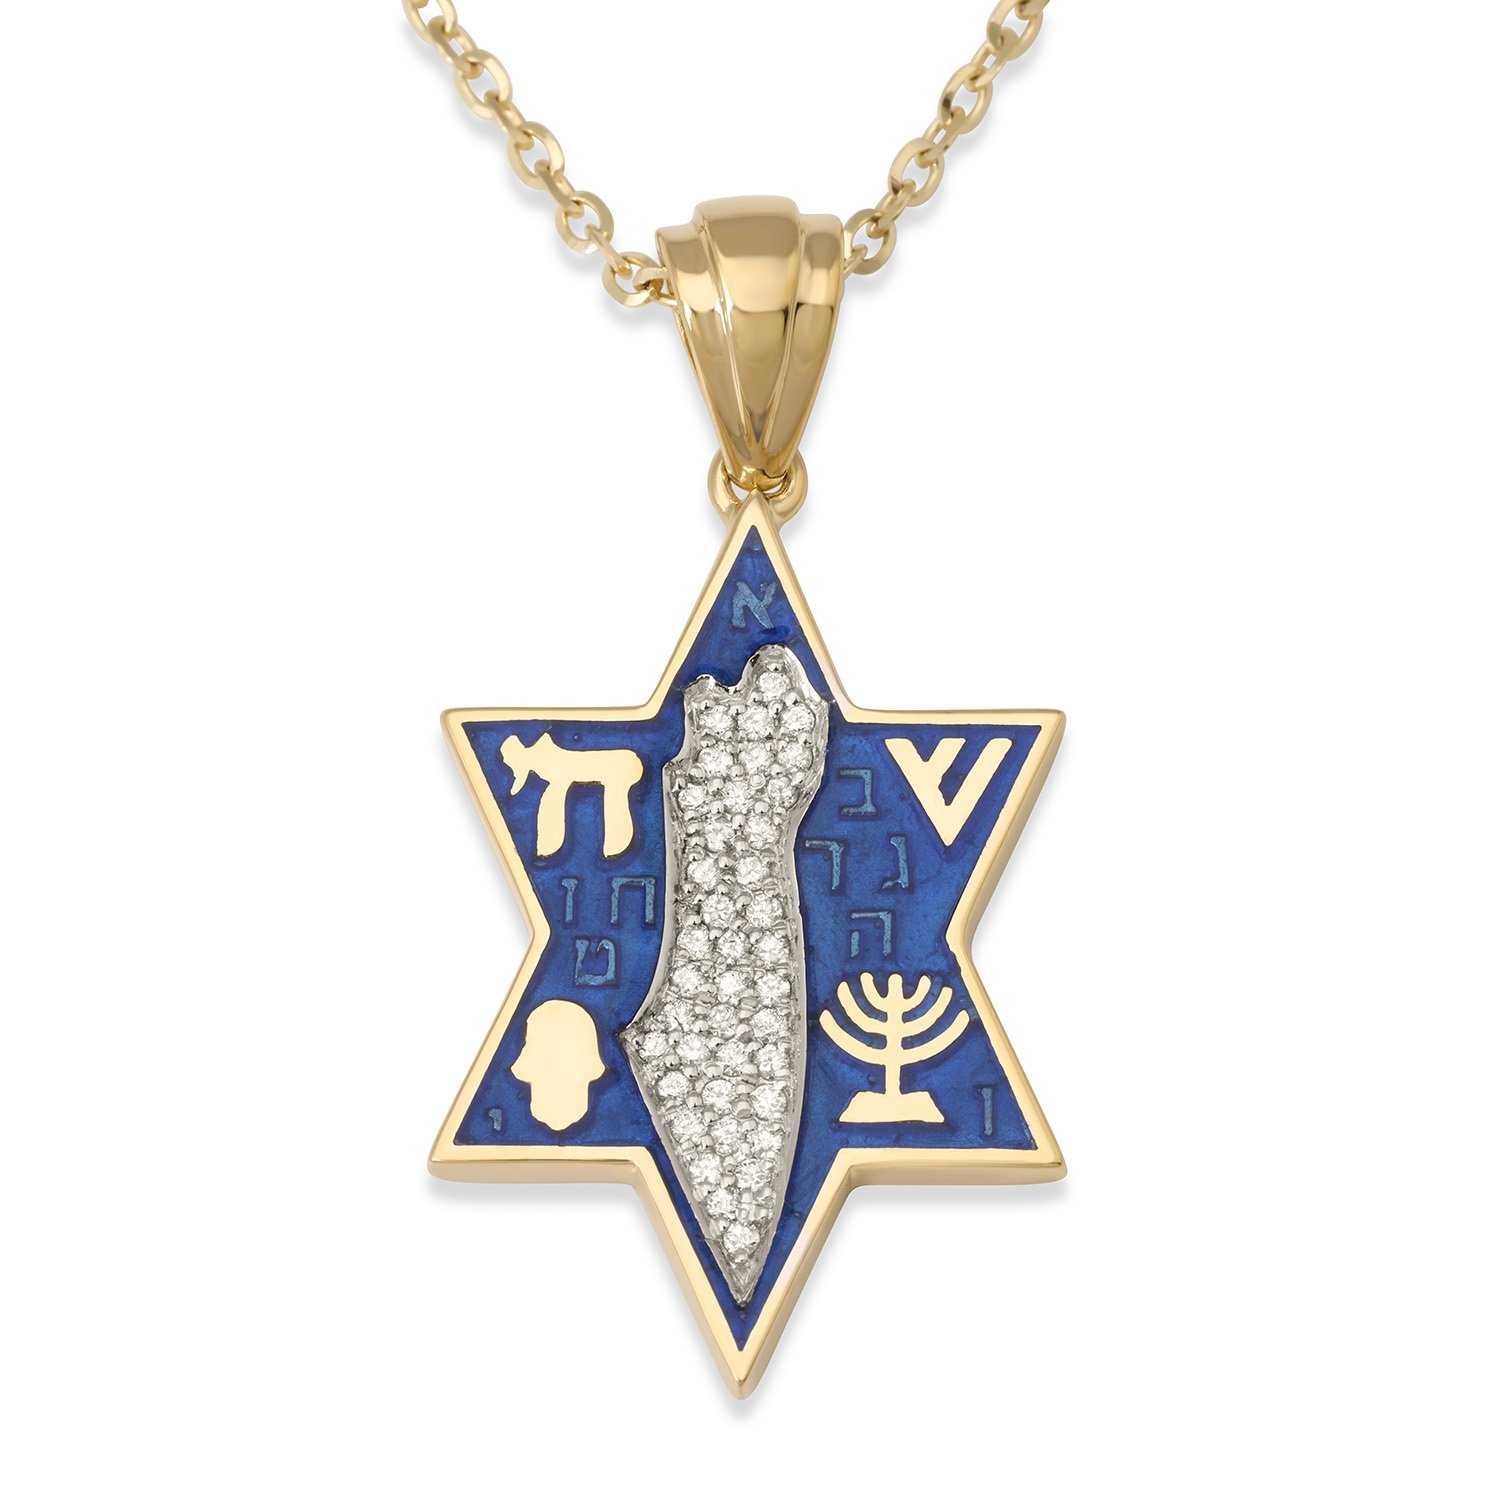 14K Gold Star of David Pendant with Diamond-Studded Map of Israel and Jewish Symbols - 1